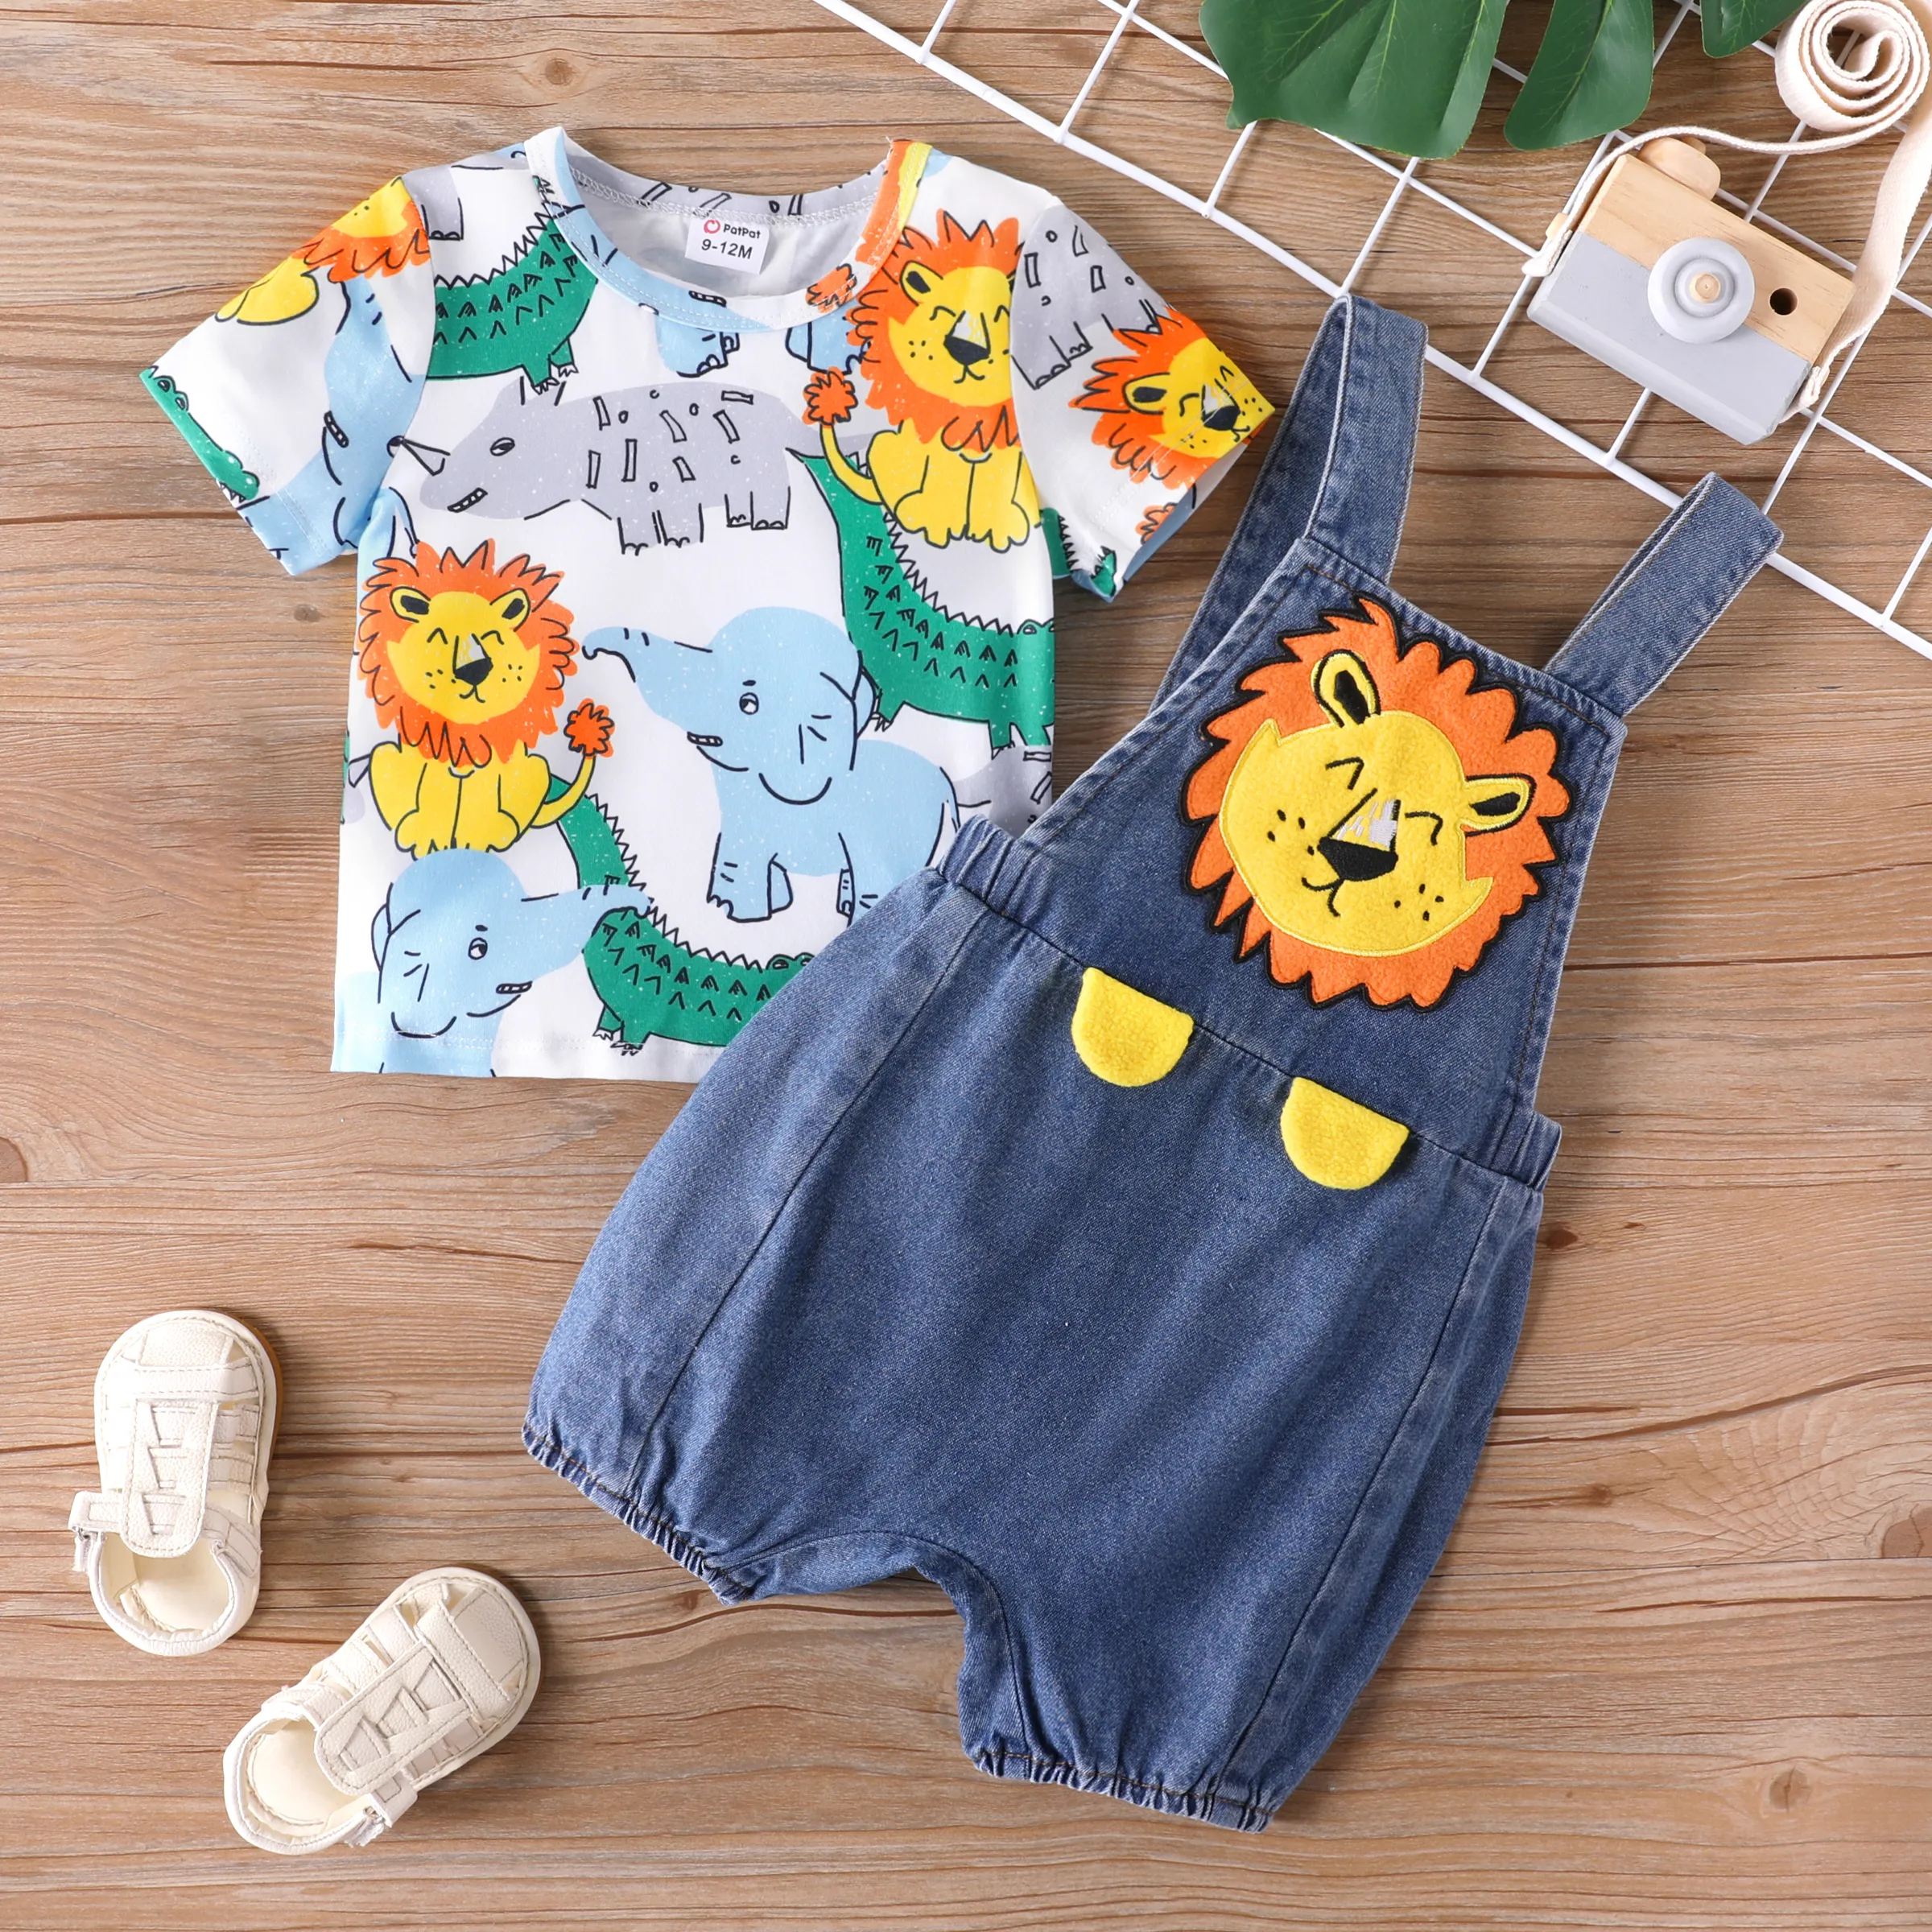 2pcs Baby Girl Imitation Denim Short-sleeve Top and Floral Print Shorts Set